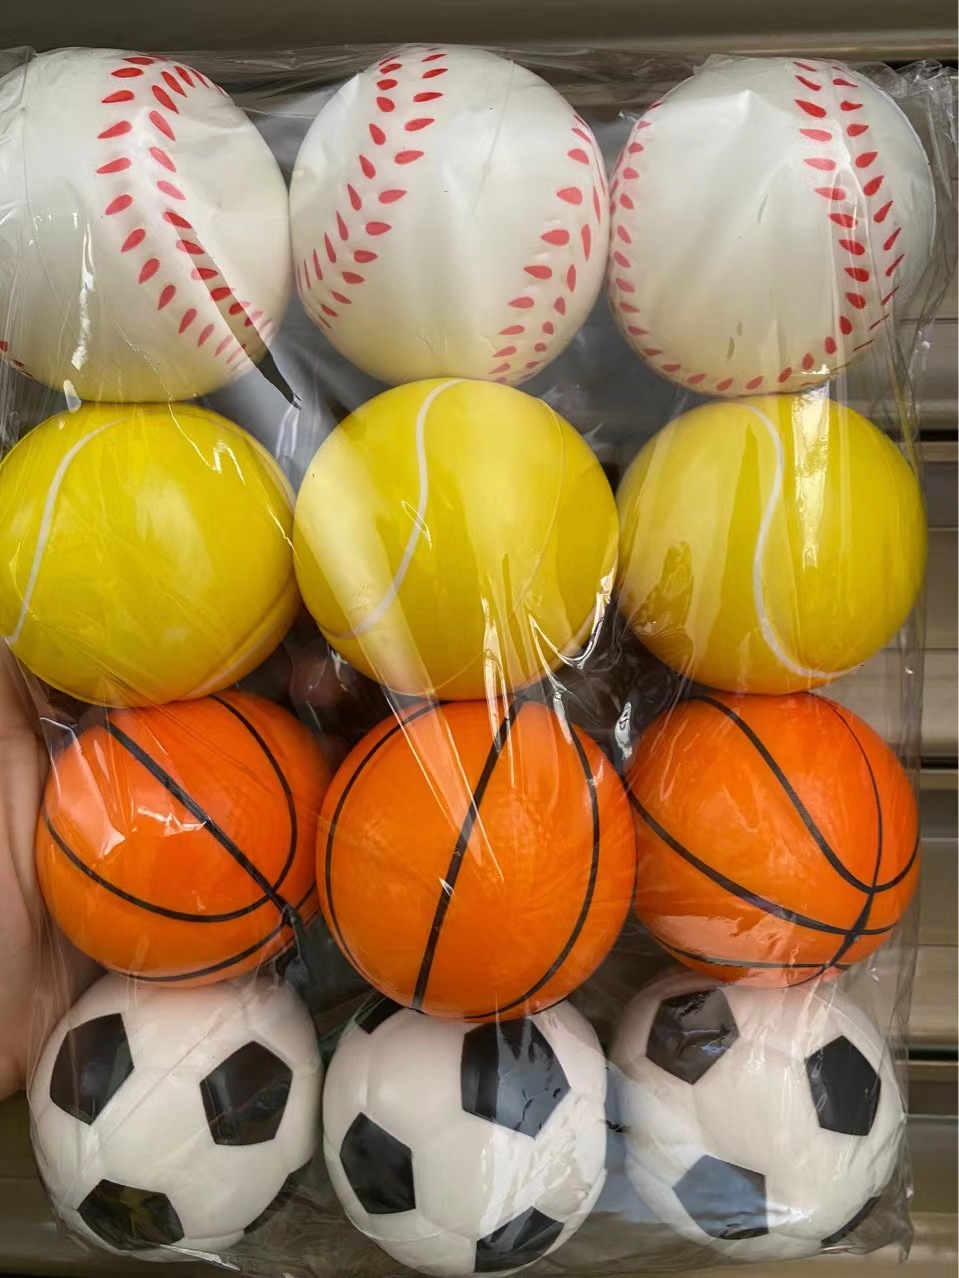 Keneric - Lot de 24 balles anti-stress rotatives - Mini ballon de football  - Jouet anti-stress - Petit cadeau danniversaire